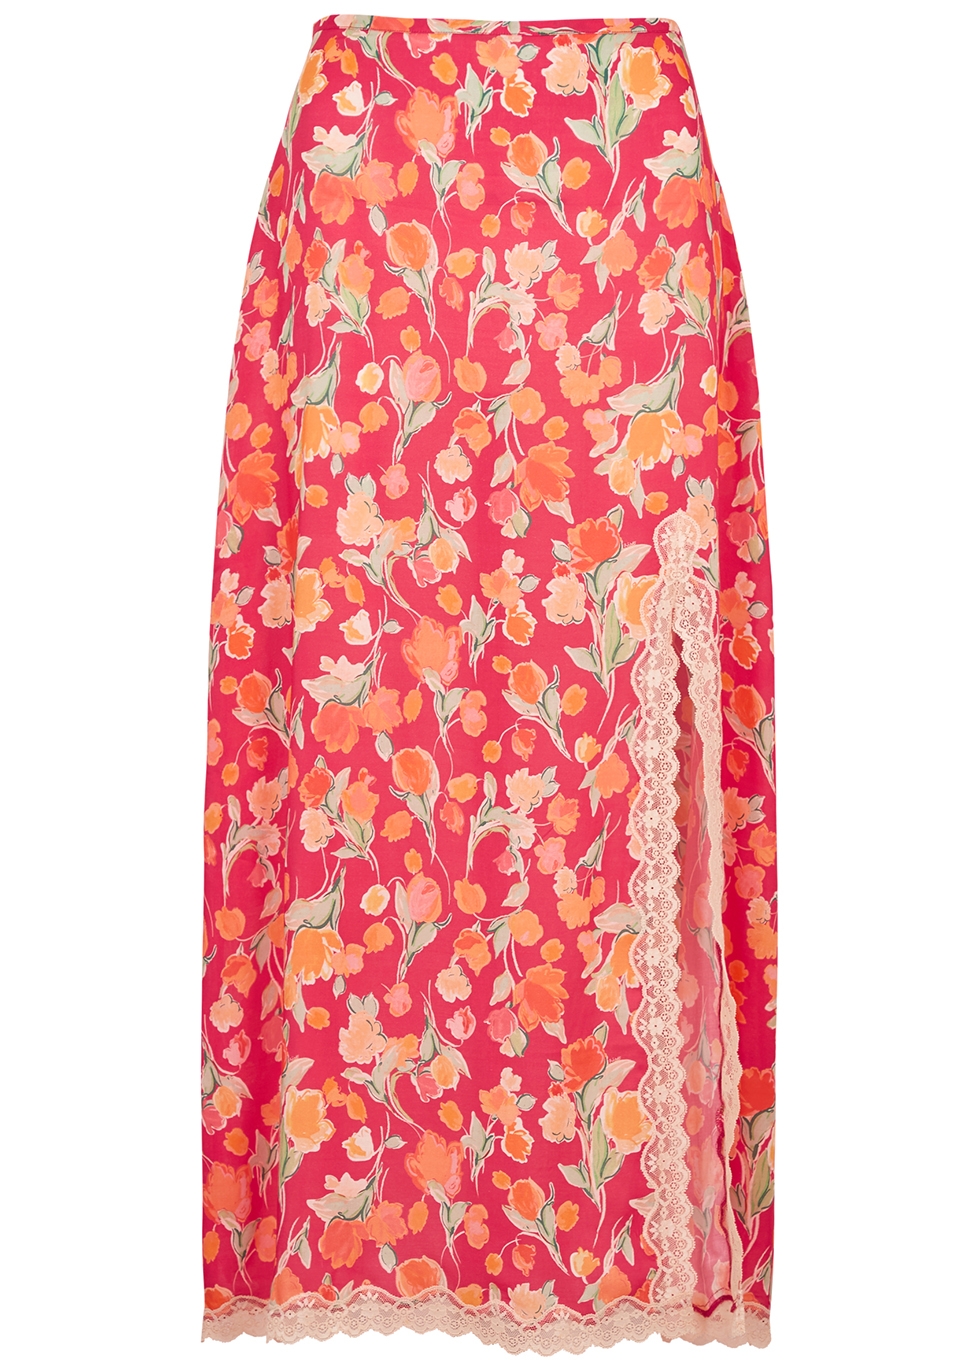 Rixo Sibilla floral-print lace-trimmed midi skirt - Harvey Nichols